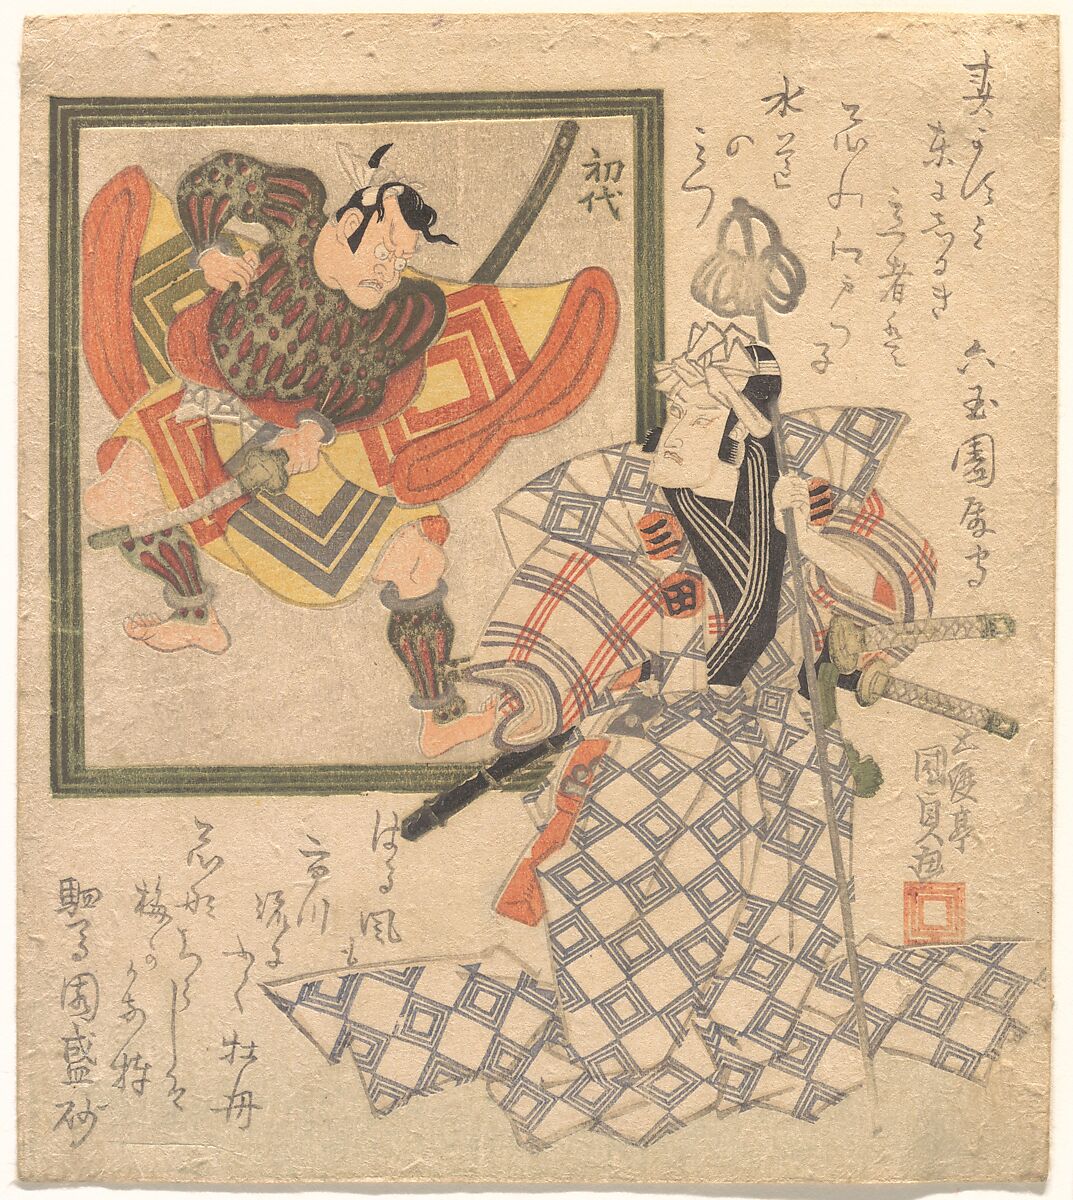 Ichikawa Danjūrō VII Admiring Ichikawa Danjūrō I in an Inset Portrait, Utagawa Kunisada, Woodblock print (surimono); ink, color and metallic pigment on paper; shikishiban, Japan